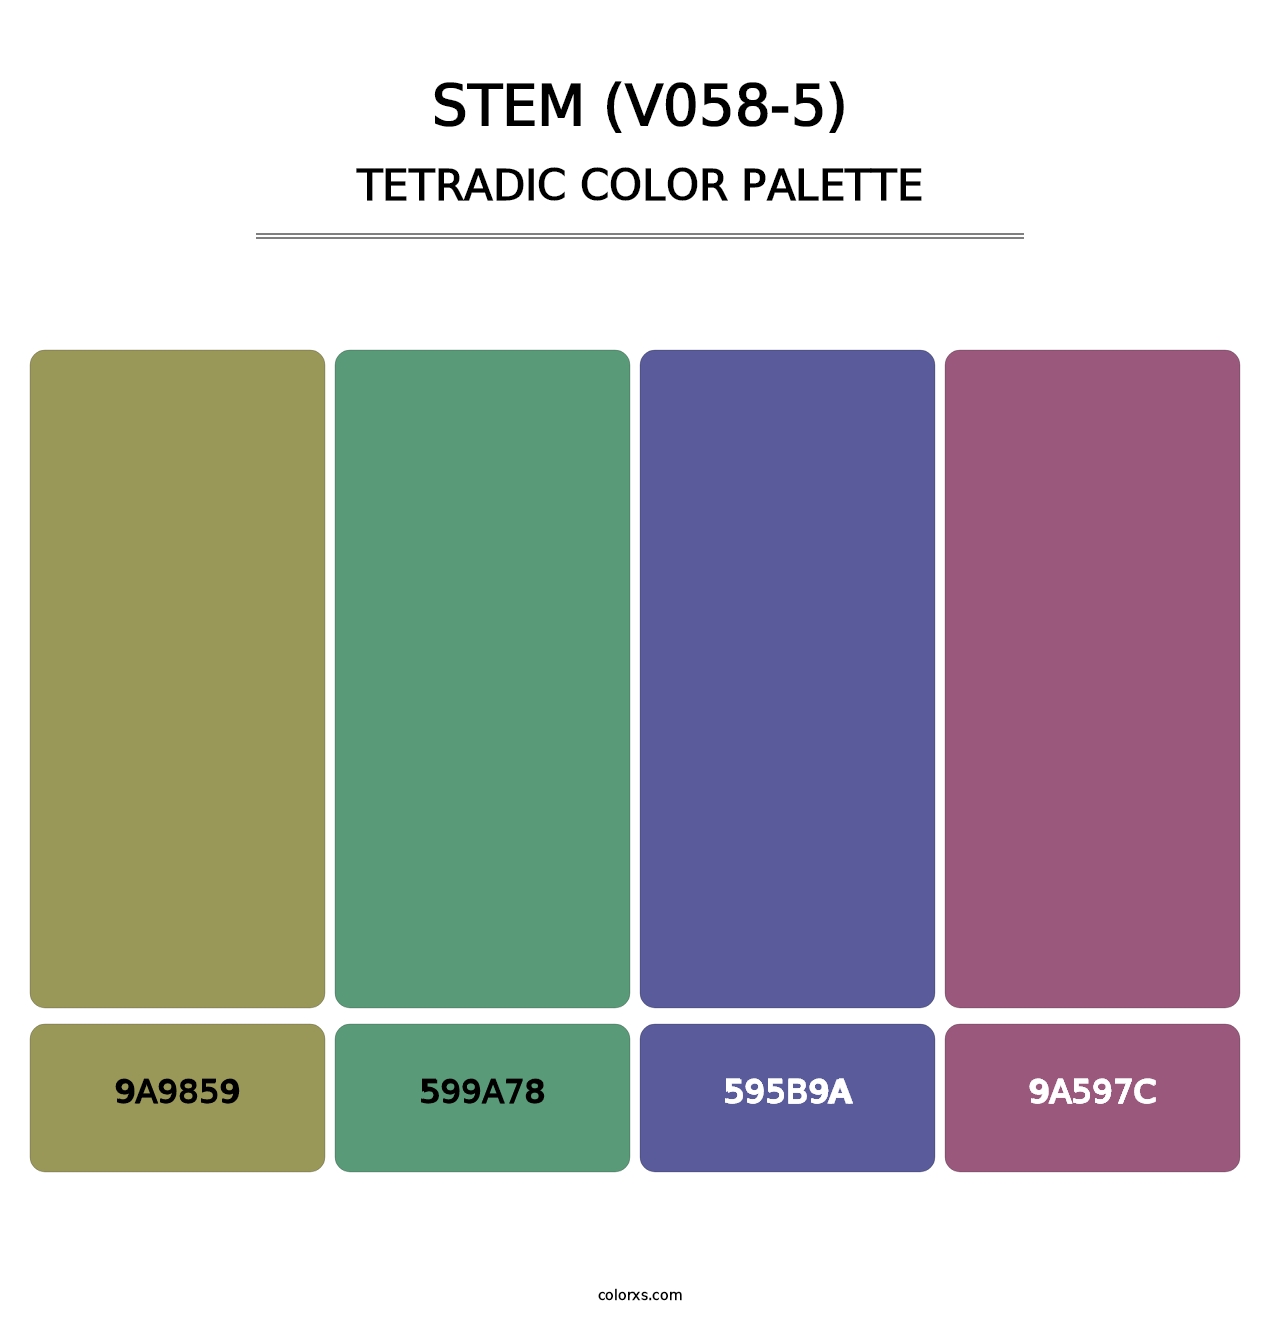 Stem (V058-5) - Tetradic Color Palette